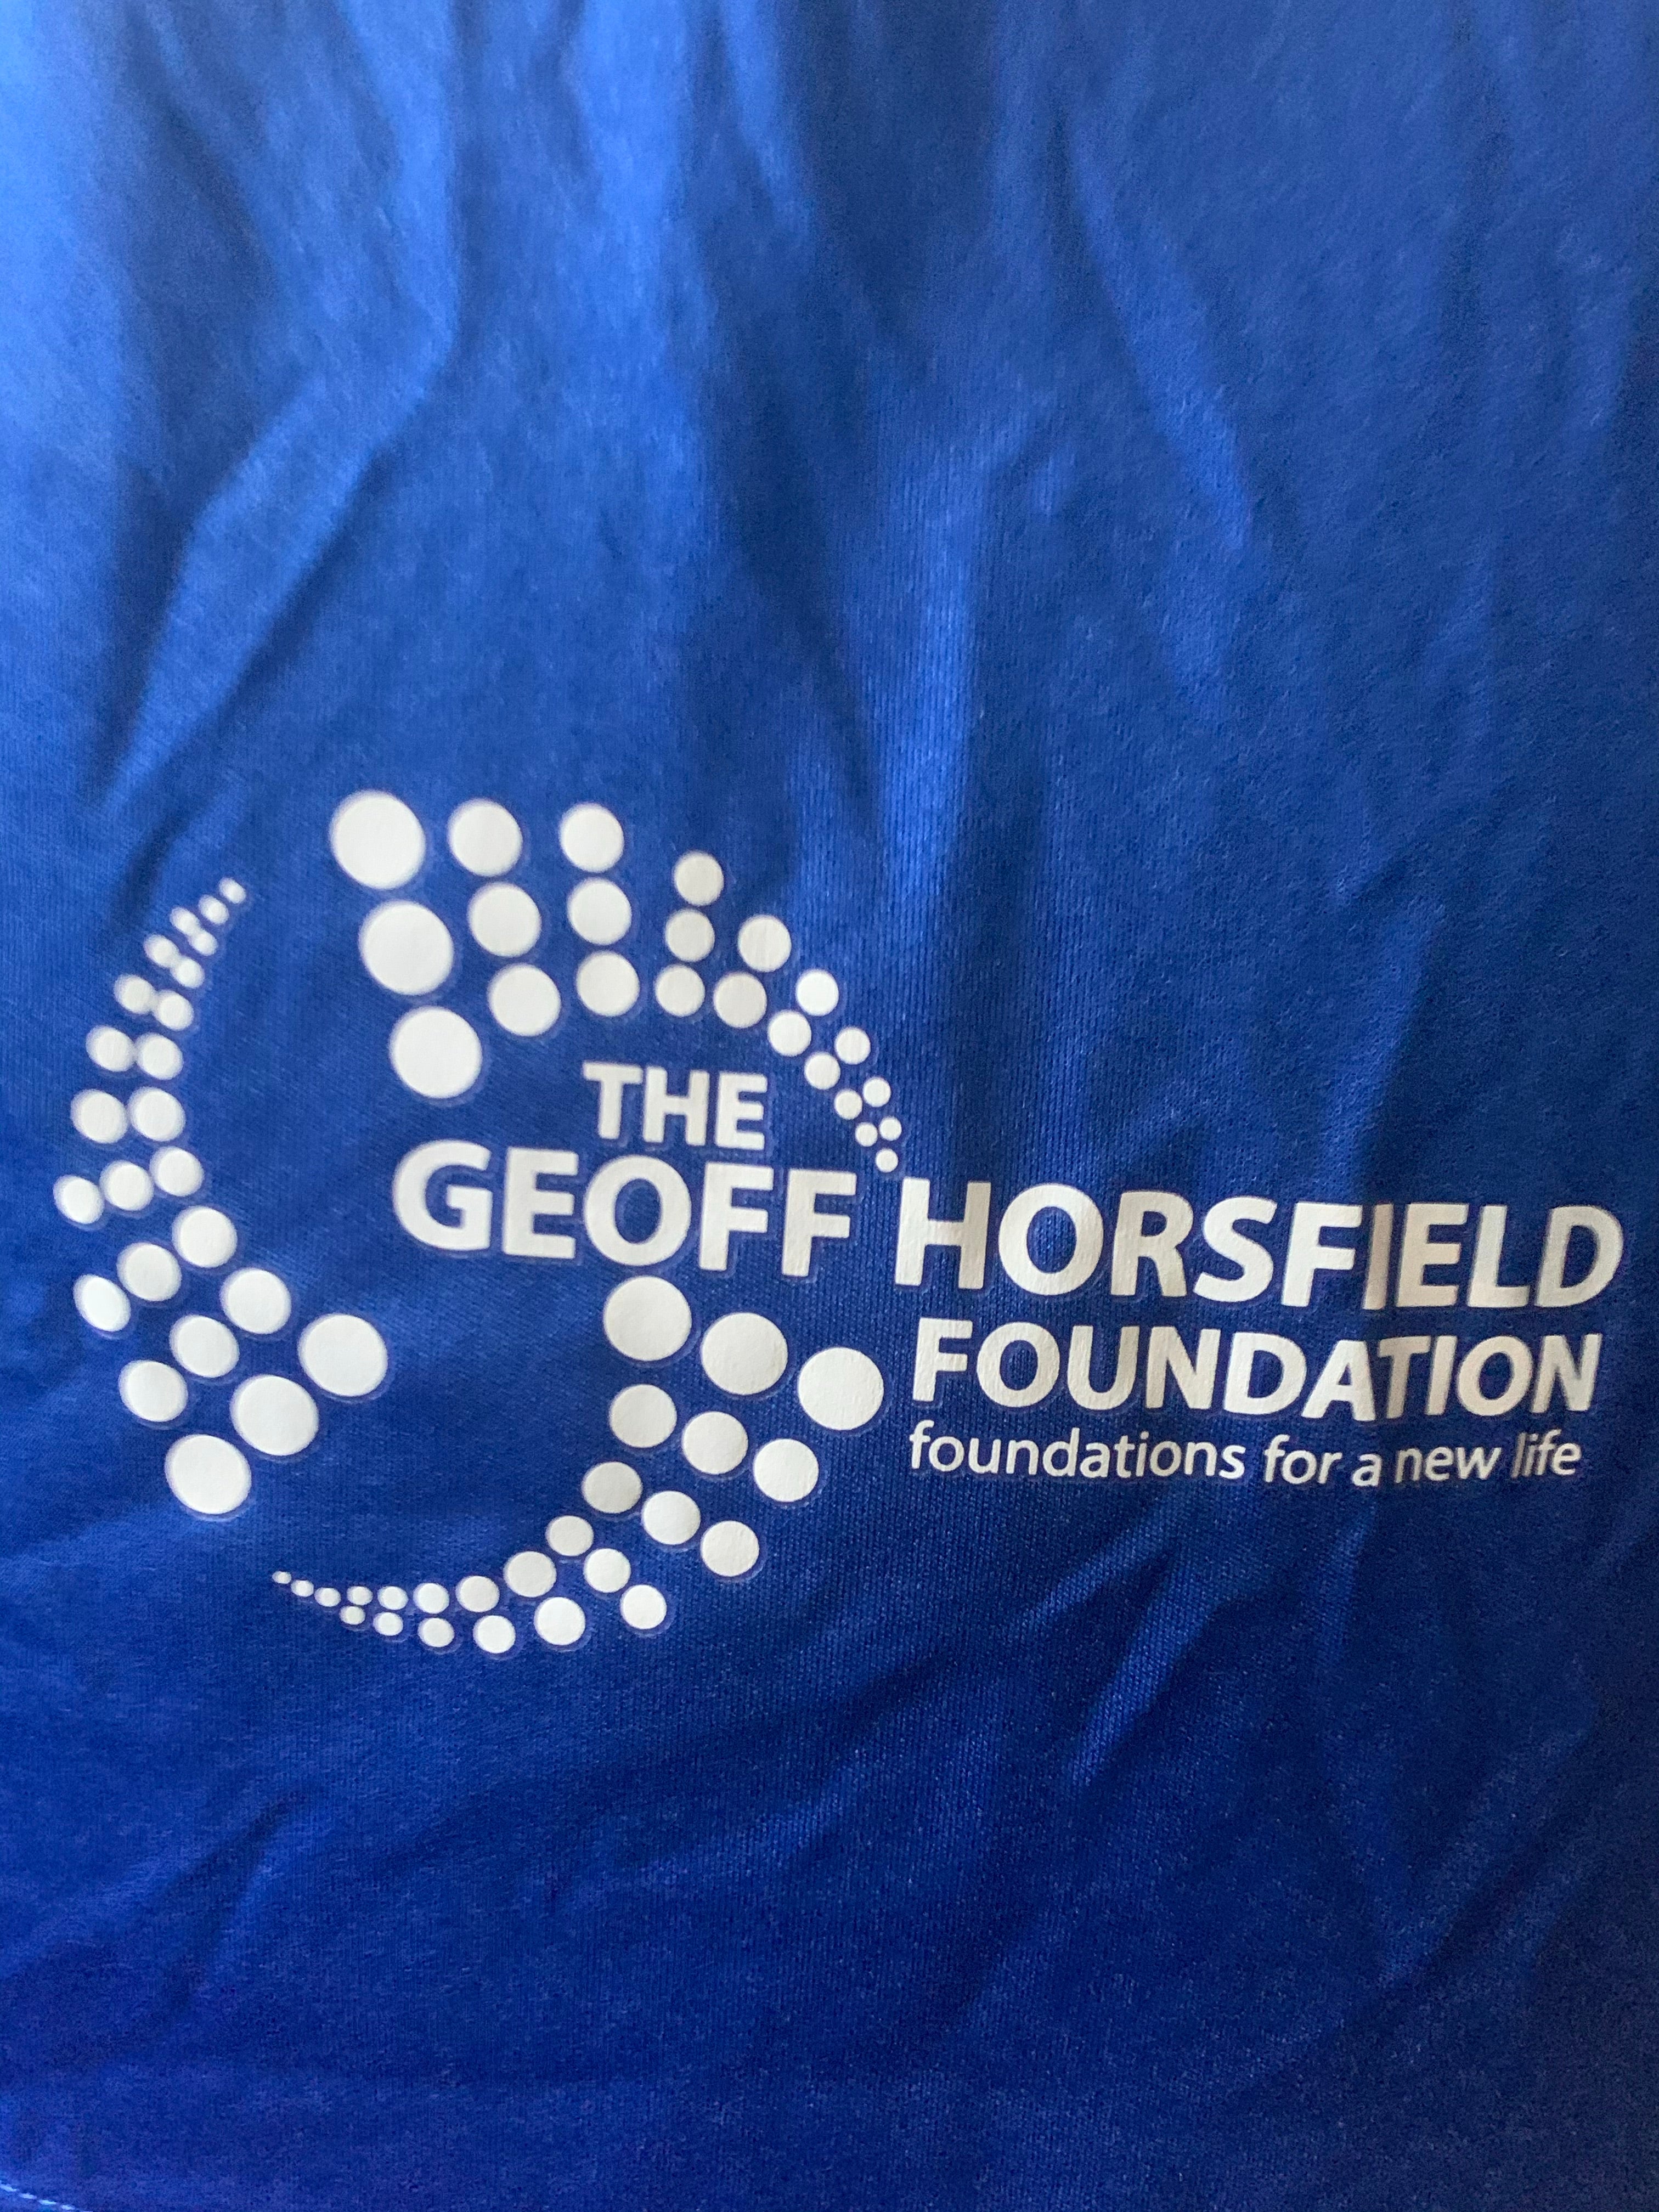 Michael Morrison Match Worn / Issue Geoff Horsfield Foundation shirt v Derby 19/04/19